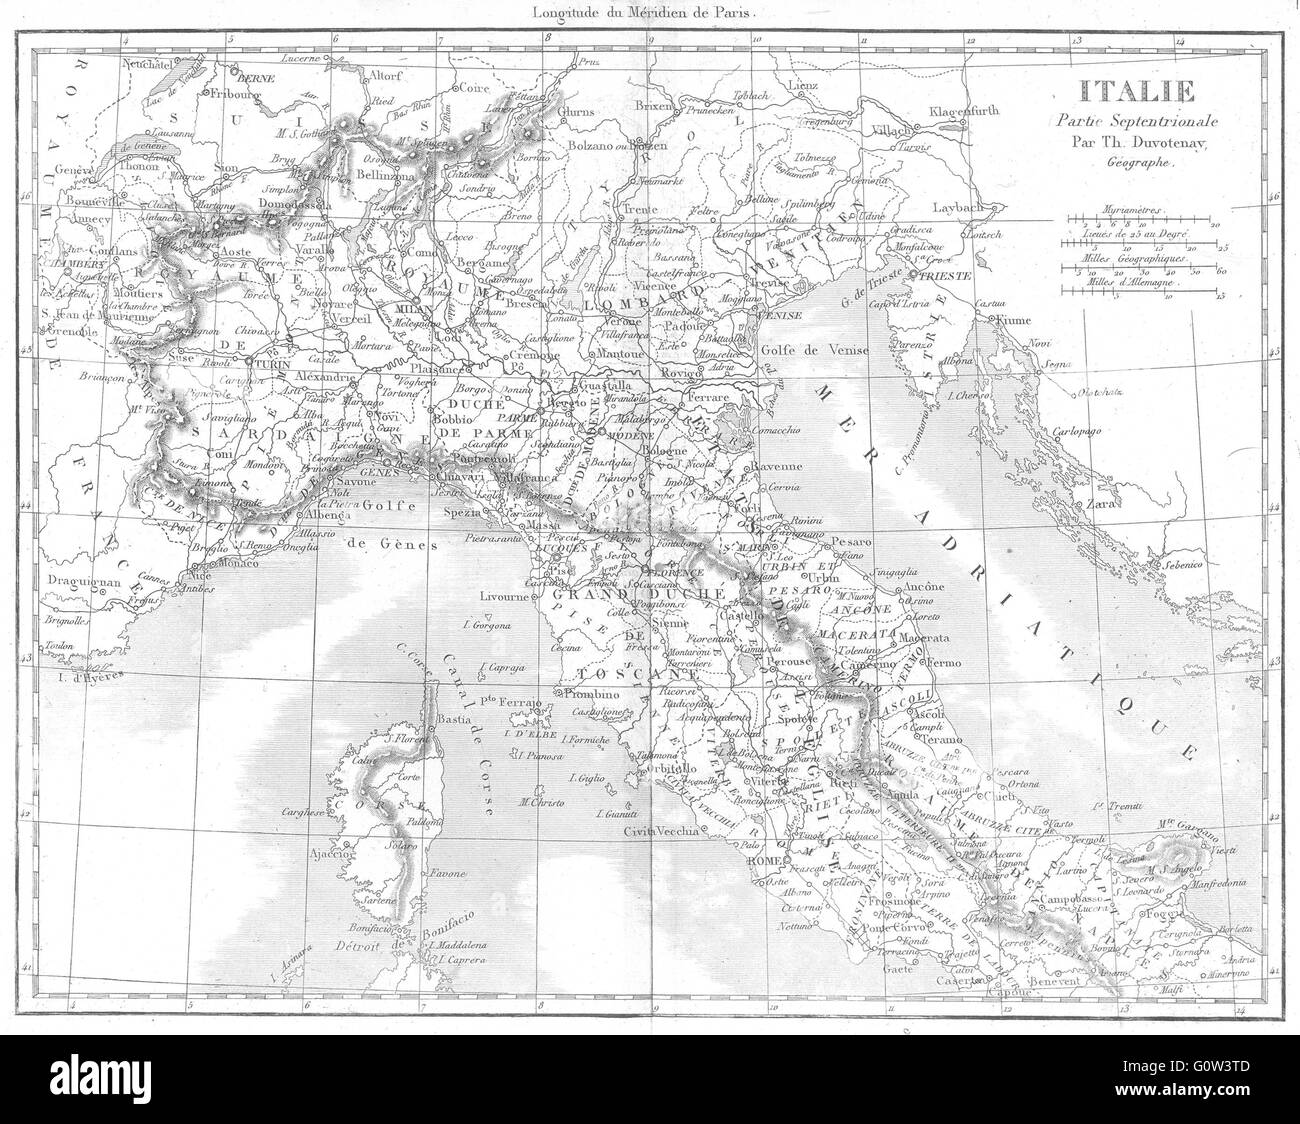 Italia: Italie Partie Septentrionale Norte, 1879 mapa antiguo Foto de stock